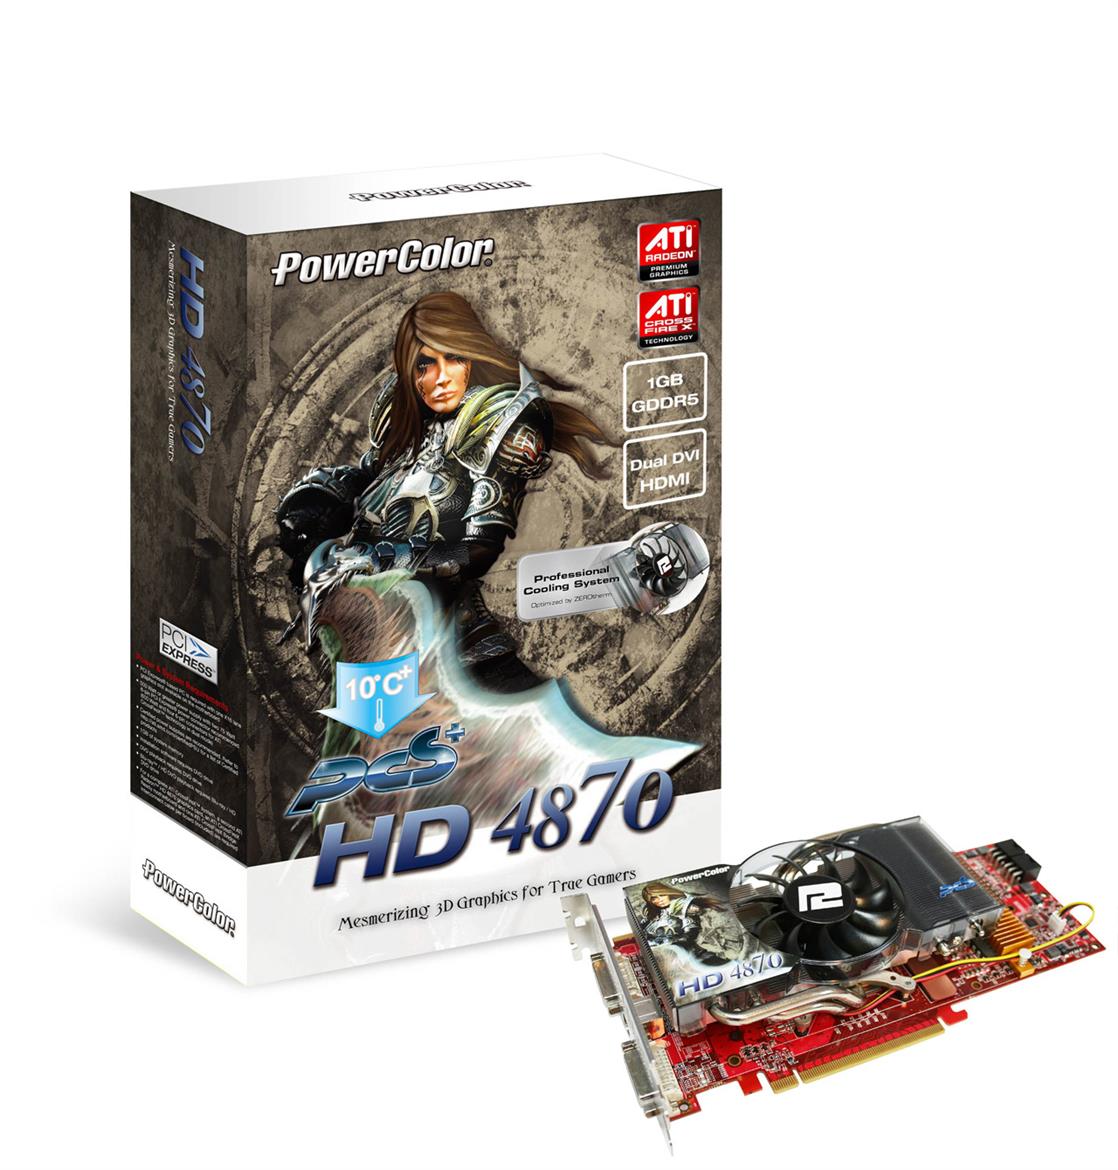 PowerColor Announces PCS+ HD4870 1GB GDDR5 